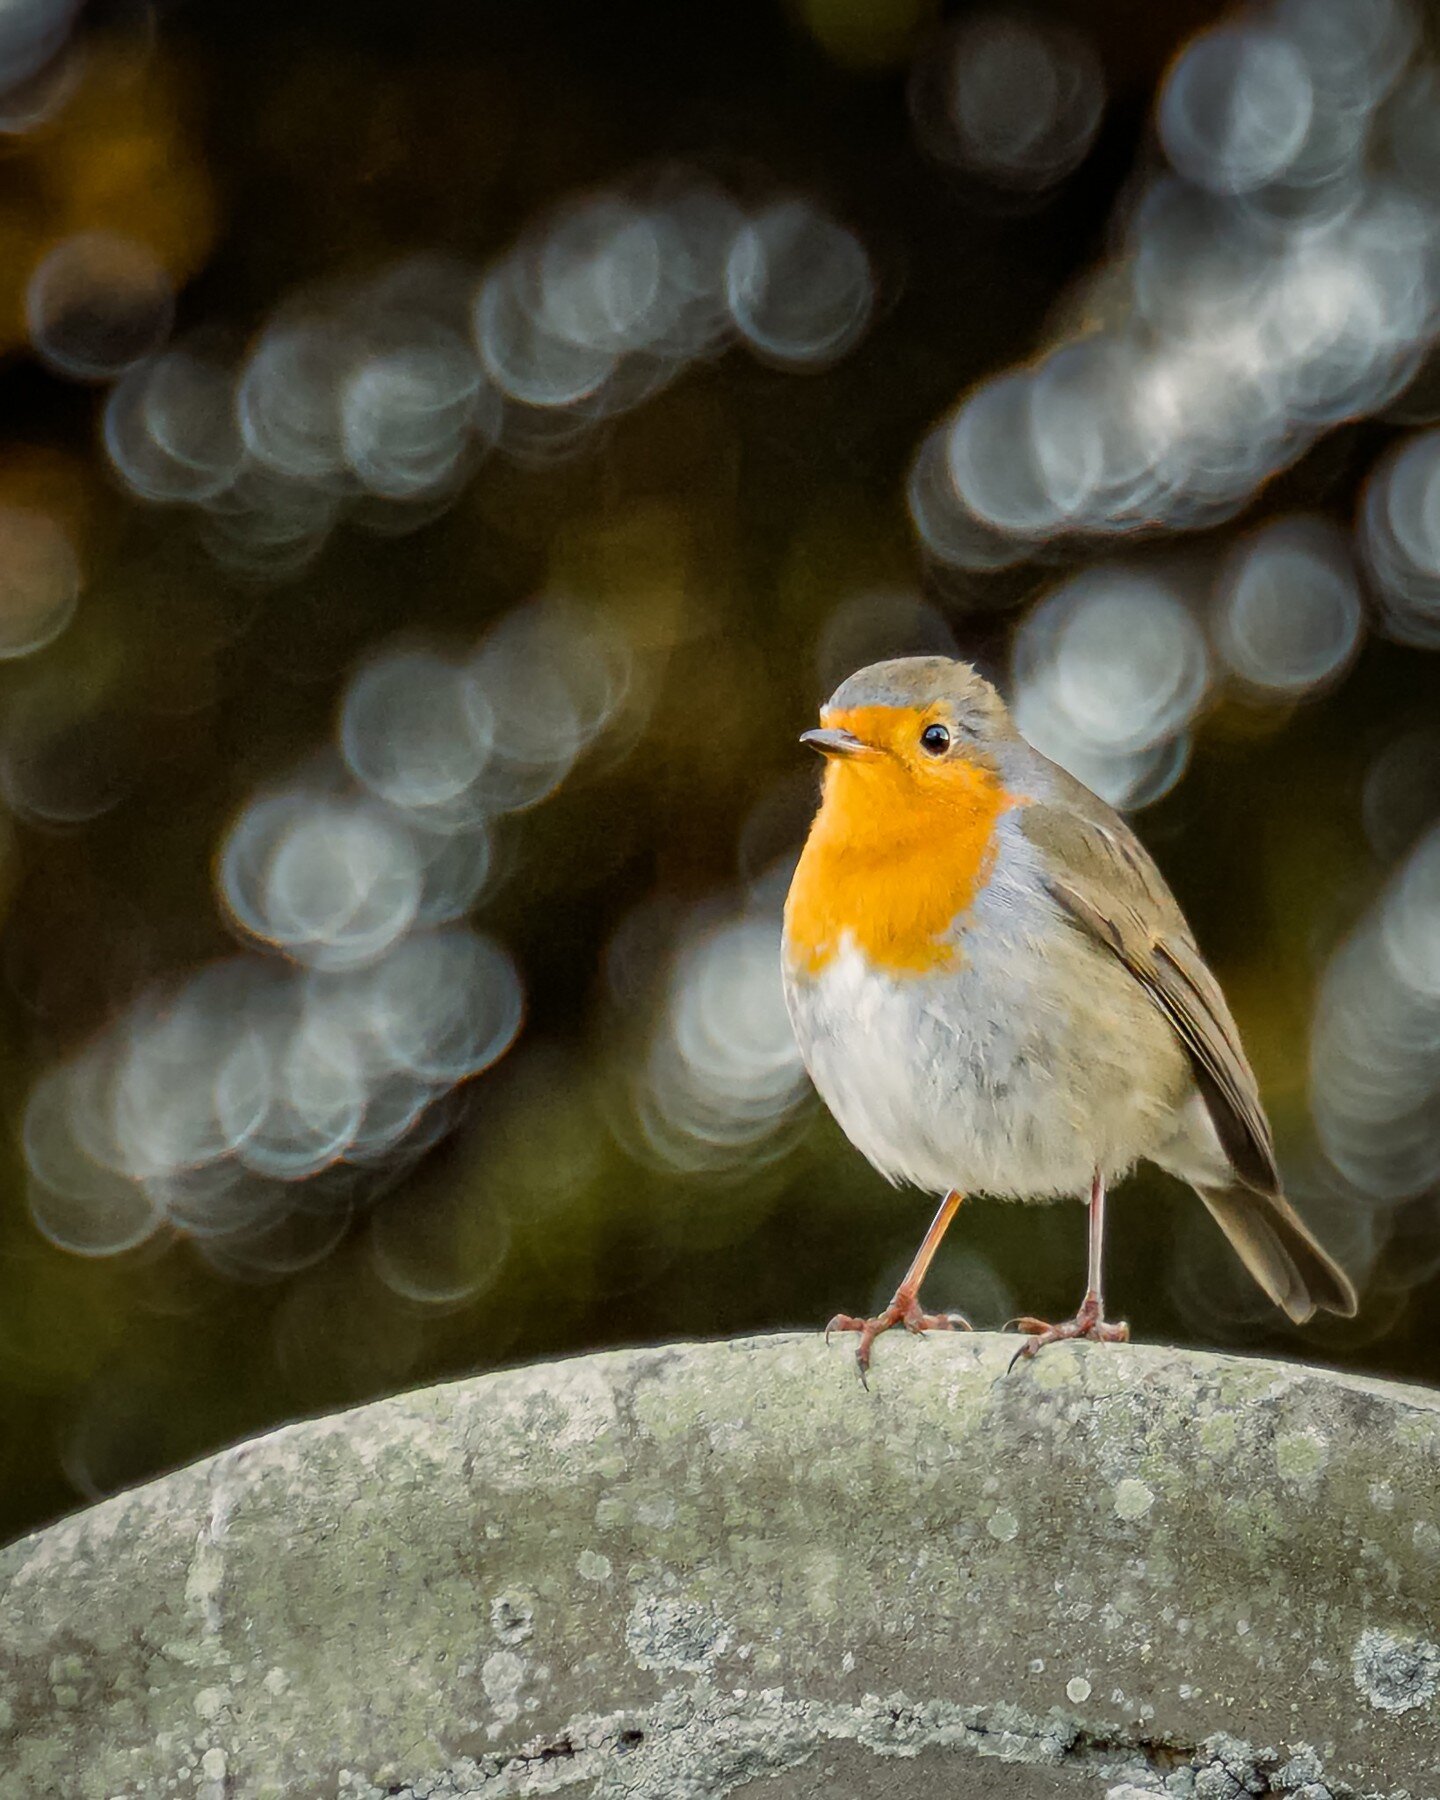 #robin 
#red
#robins 
#ukwildlifeimages 
#ukwildlife 
#gardenbirds 
#gardenbirdsuk 
#cemetaryphotography 
#winterbirds 
#sonya7iii
#tamron2875